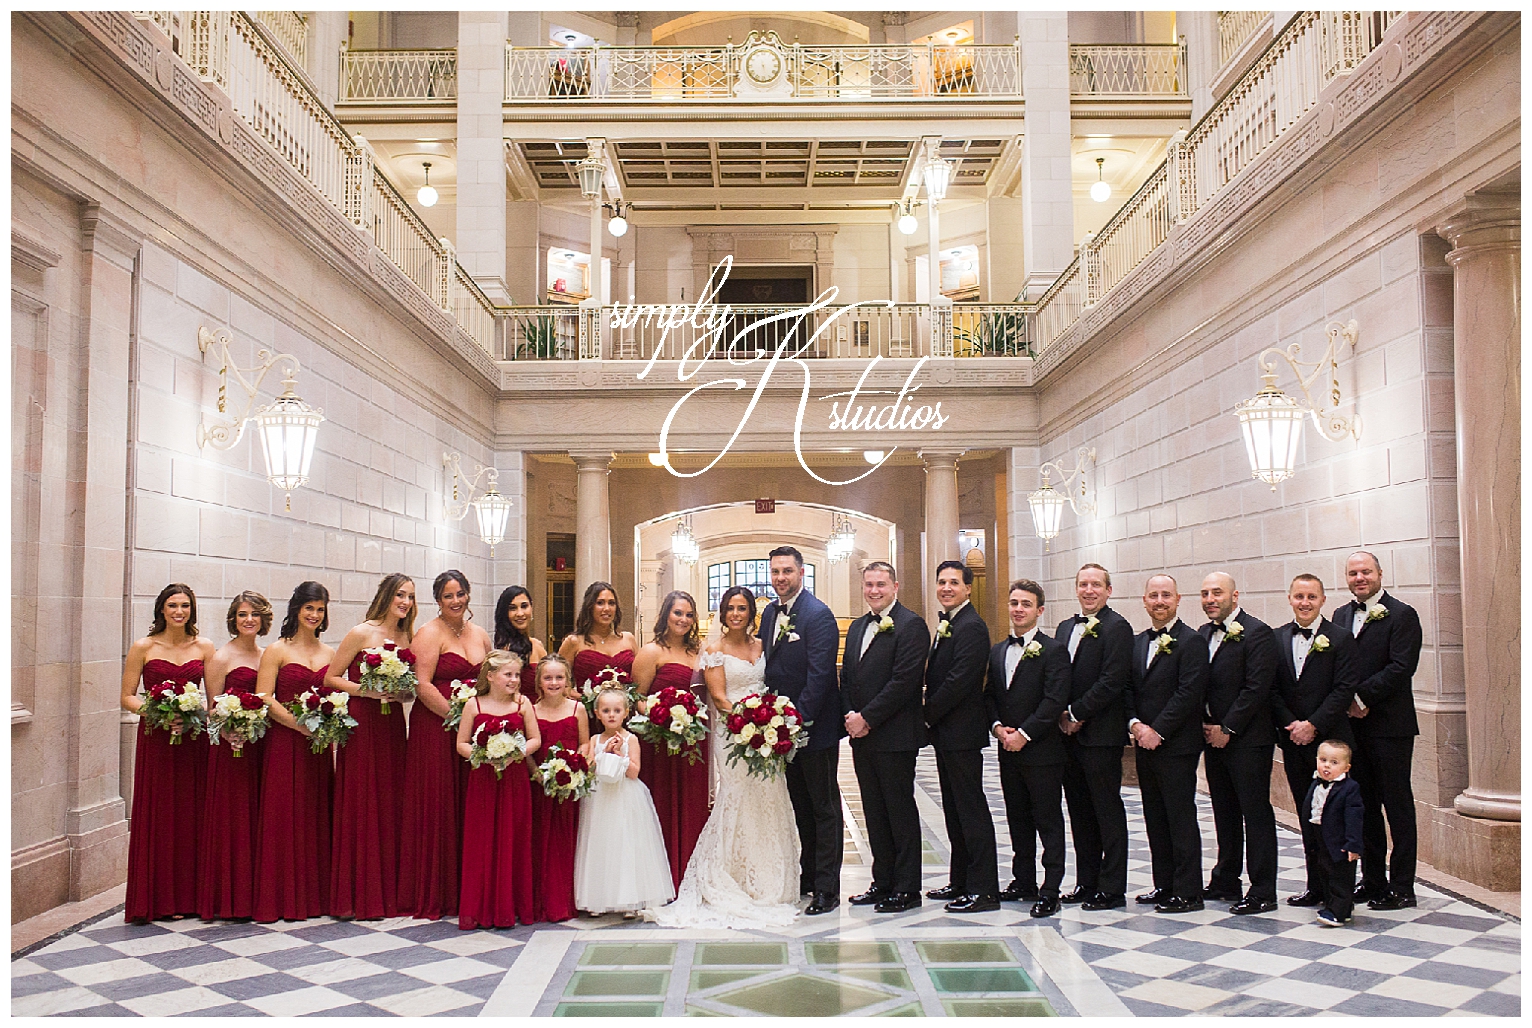 42 Hartford City Hall Wedding Photos.jpg